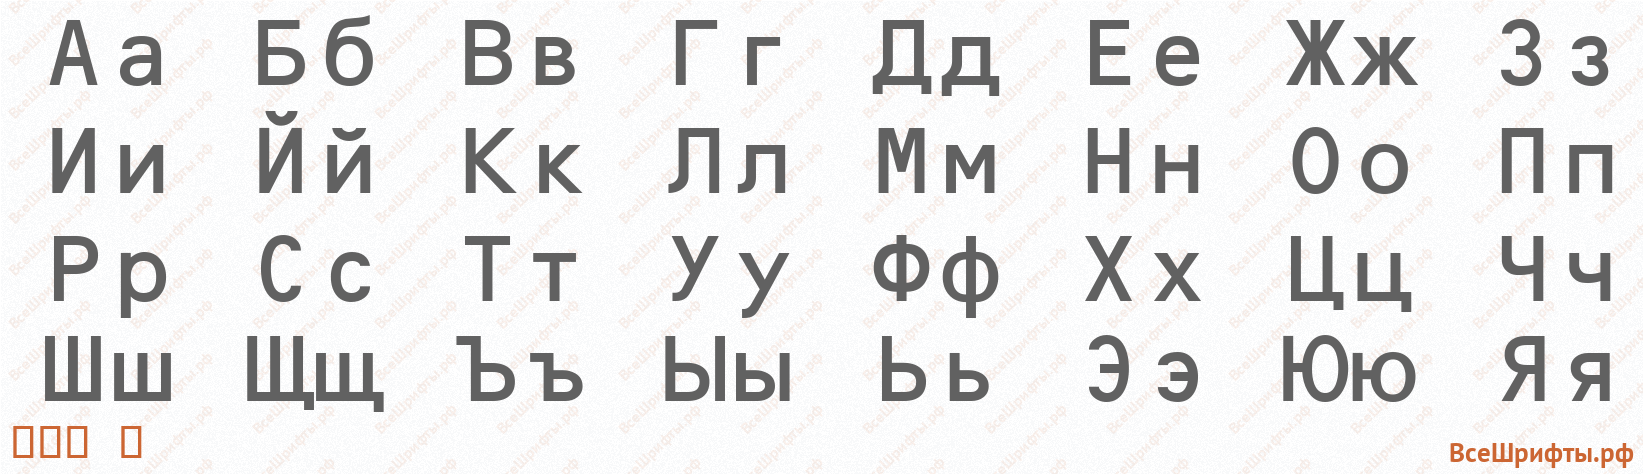 Шрифт OCR B с русскими буквами